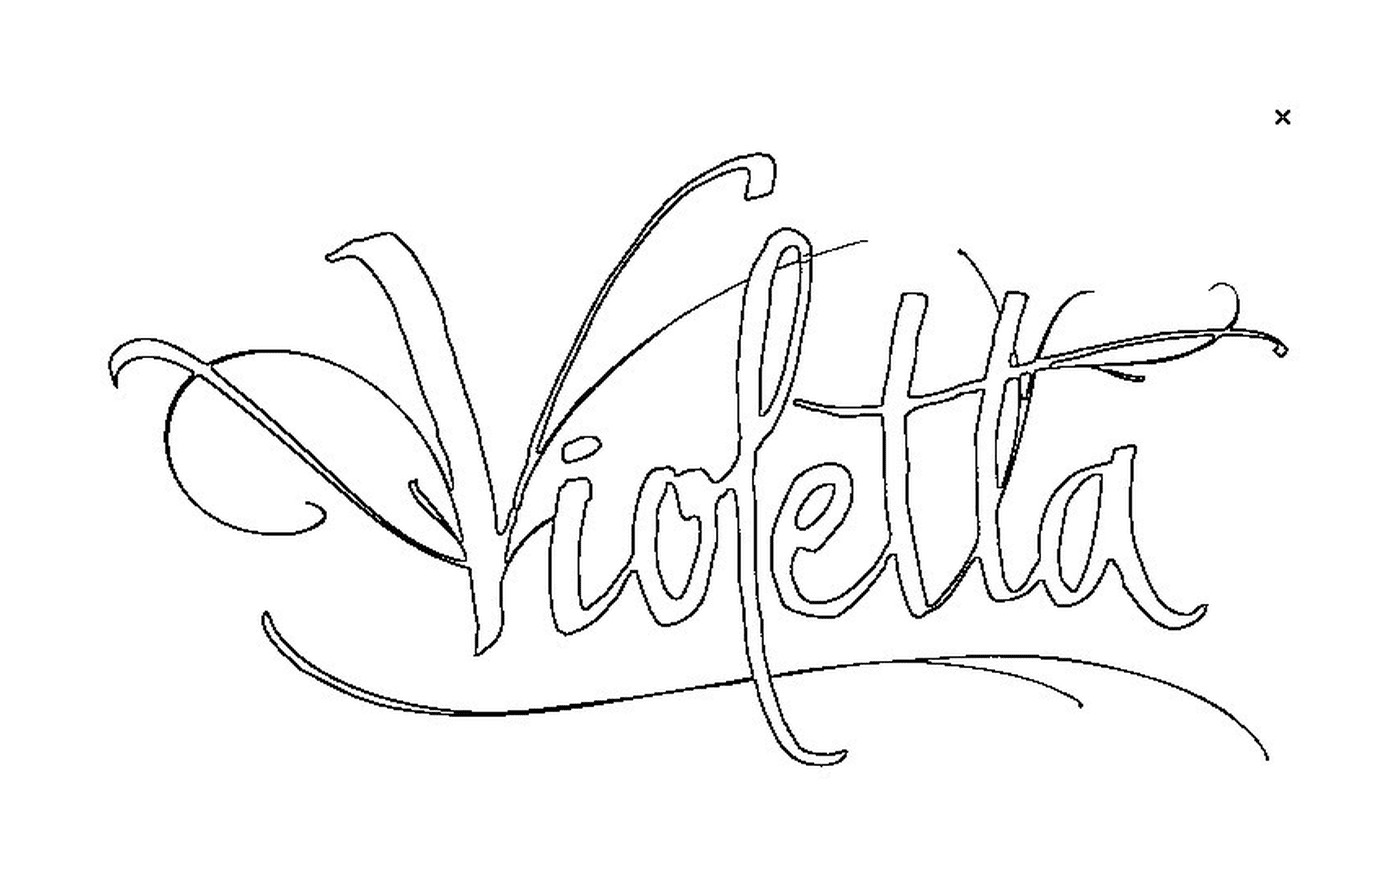  Логотип < < Виолетта > > 